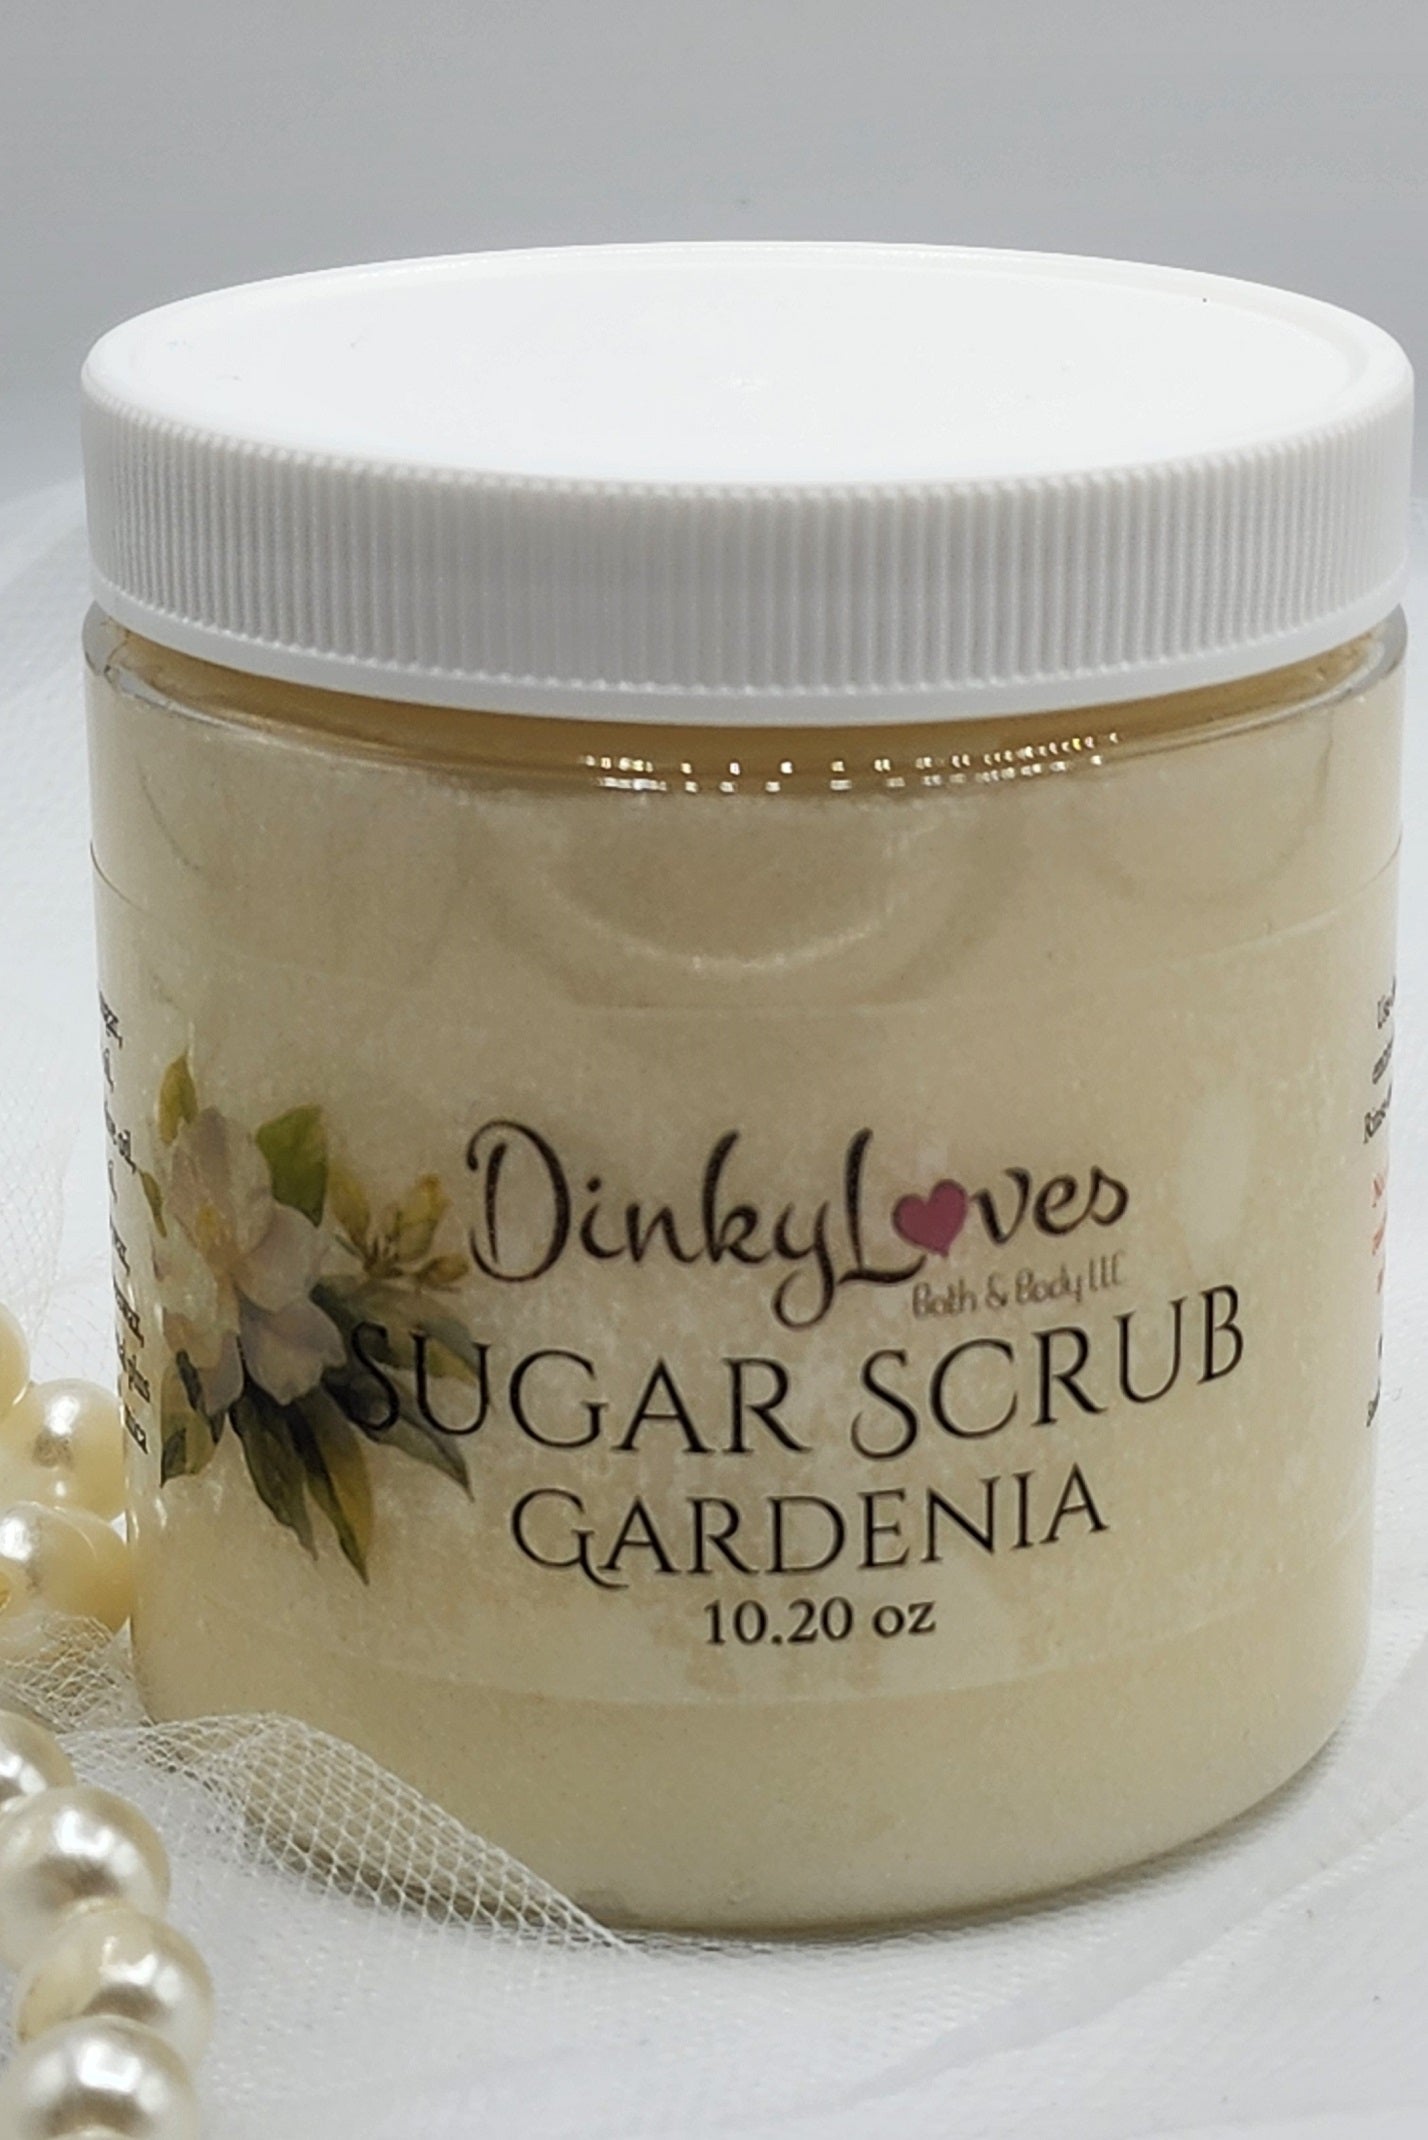 GARDENIA / Sugar Scrub / Unique Gift Idea / Handmade Sugar Scrub